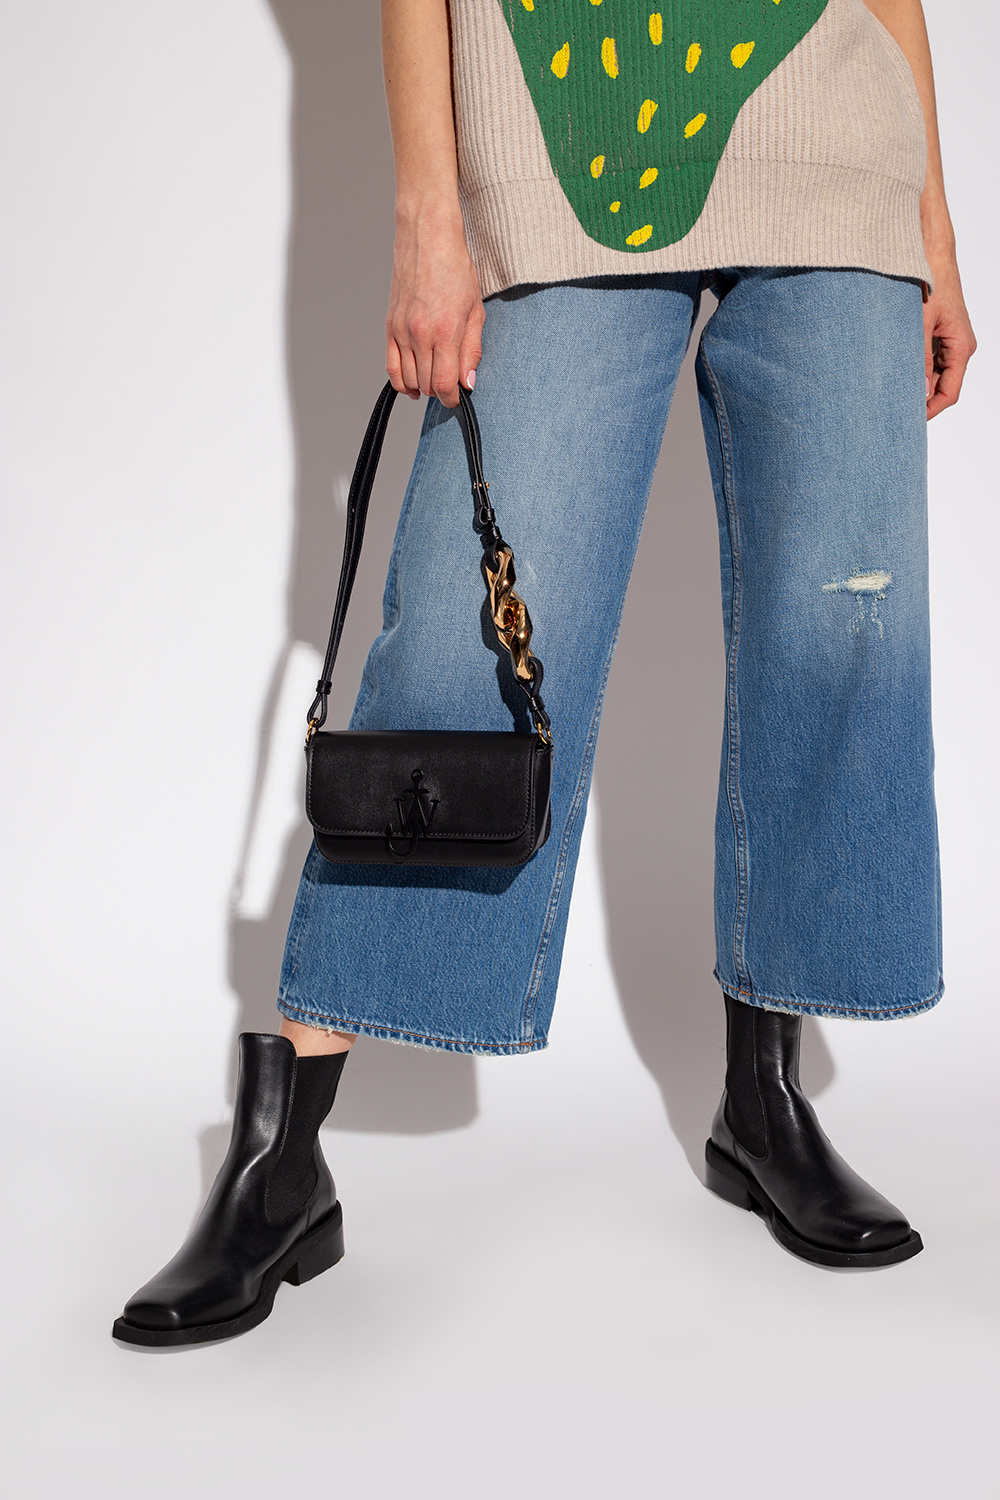 JW Anderson 'Bom Leather Top Handle Bag